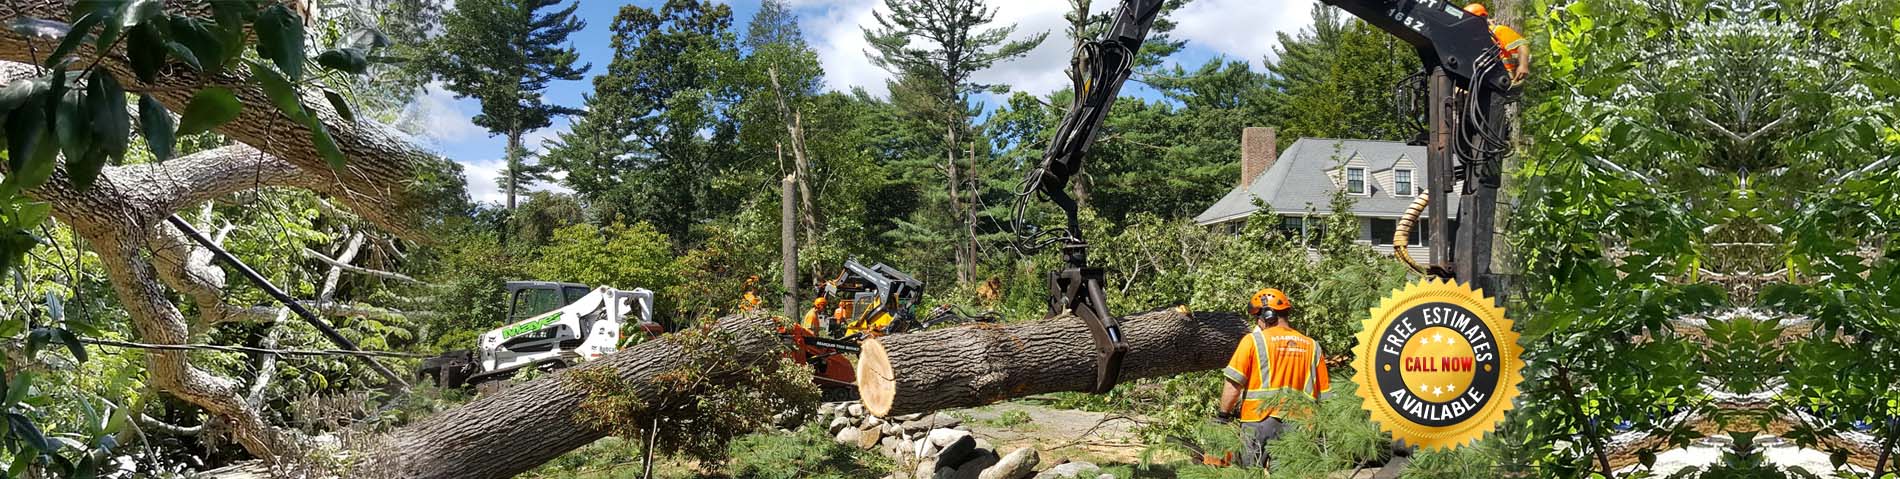 Tree removal - Sperryville, VA - Zach's Tree Service